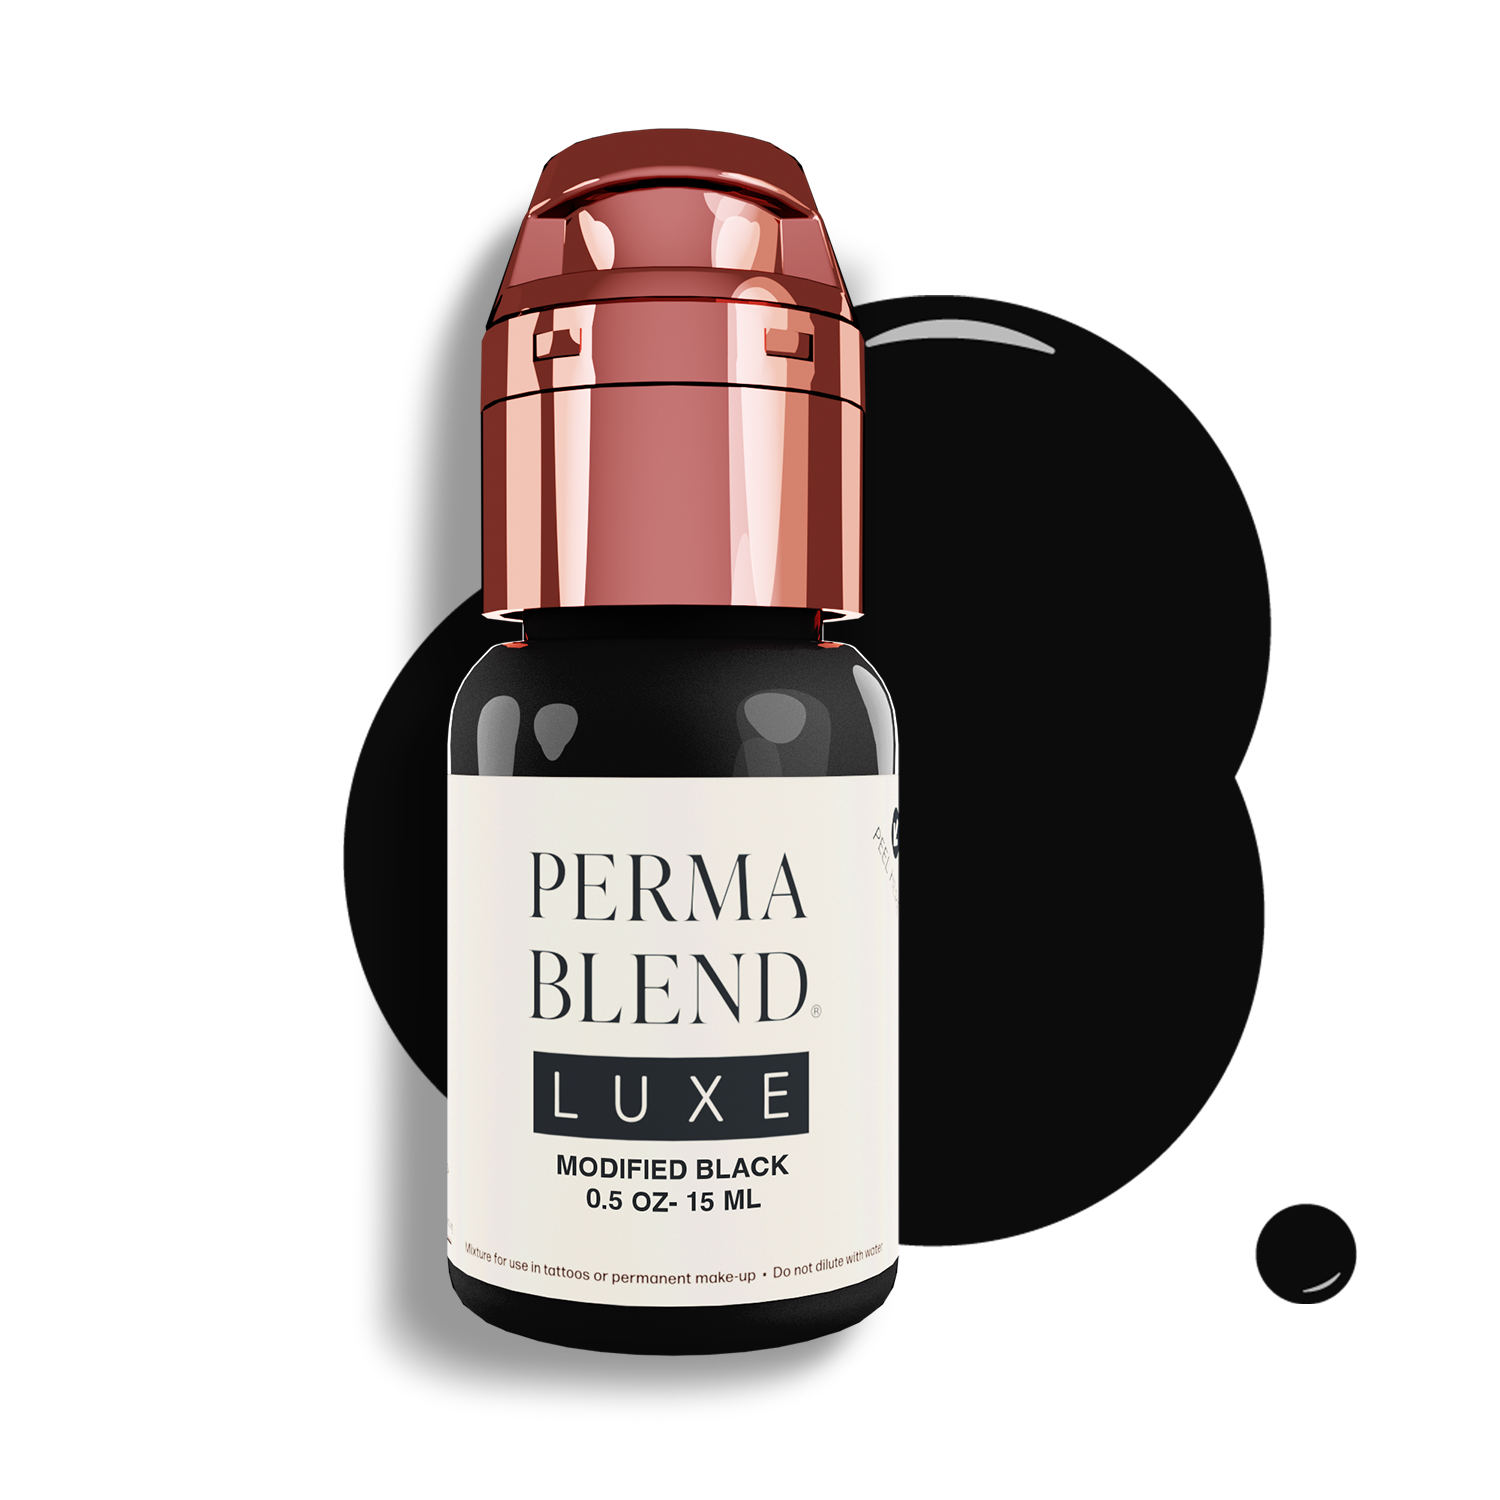 Perma Blend Luxe PMU Ink | Modifed Black | Eyeliner | 15 ml